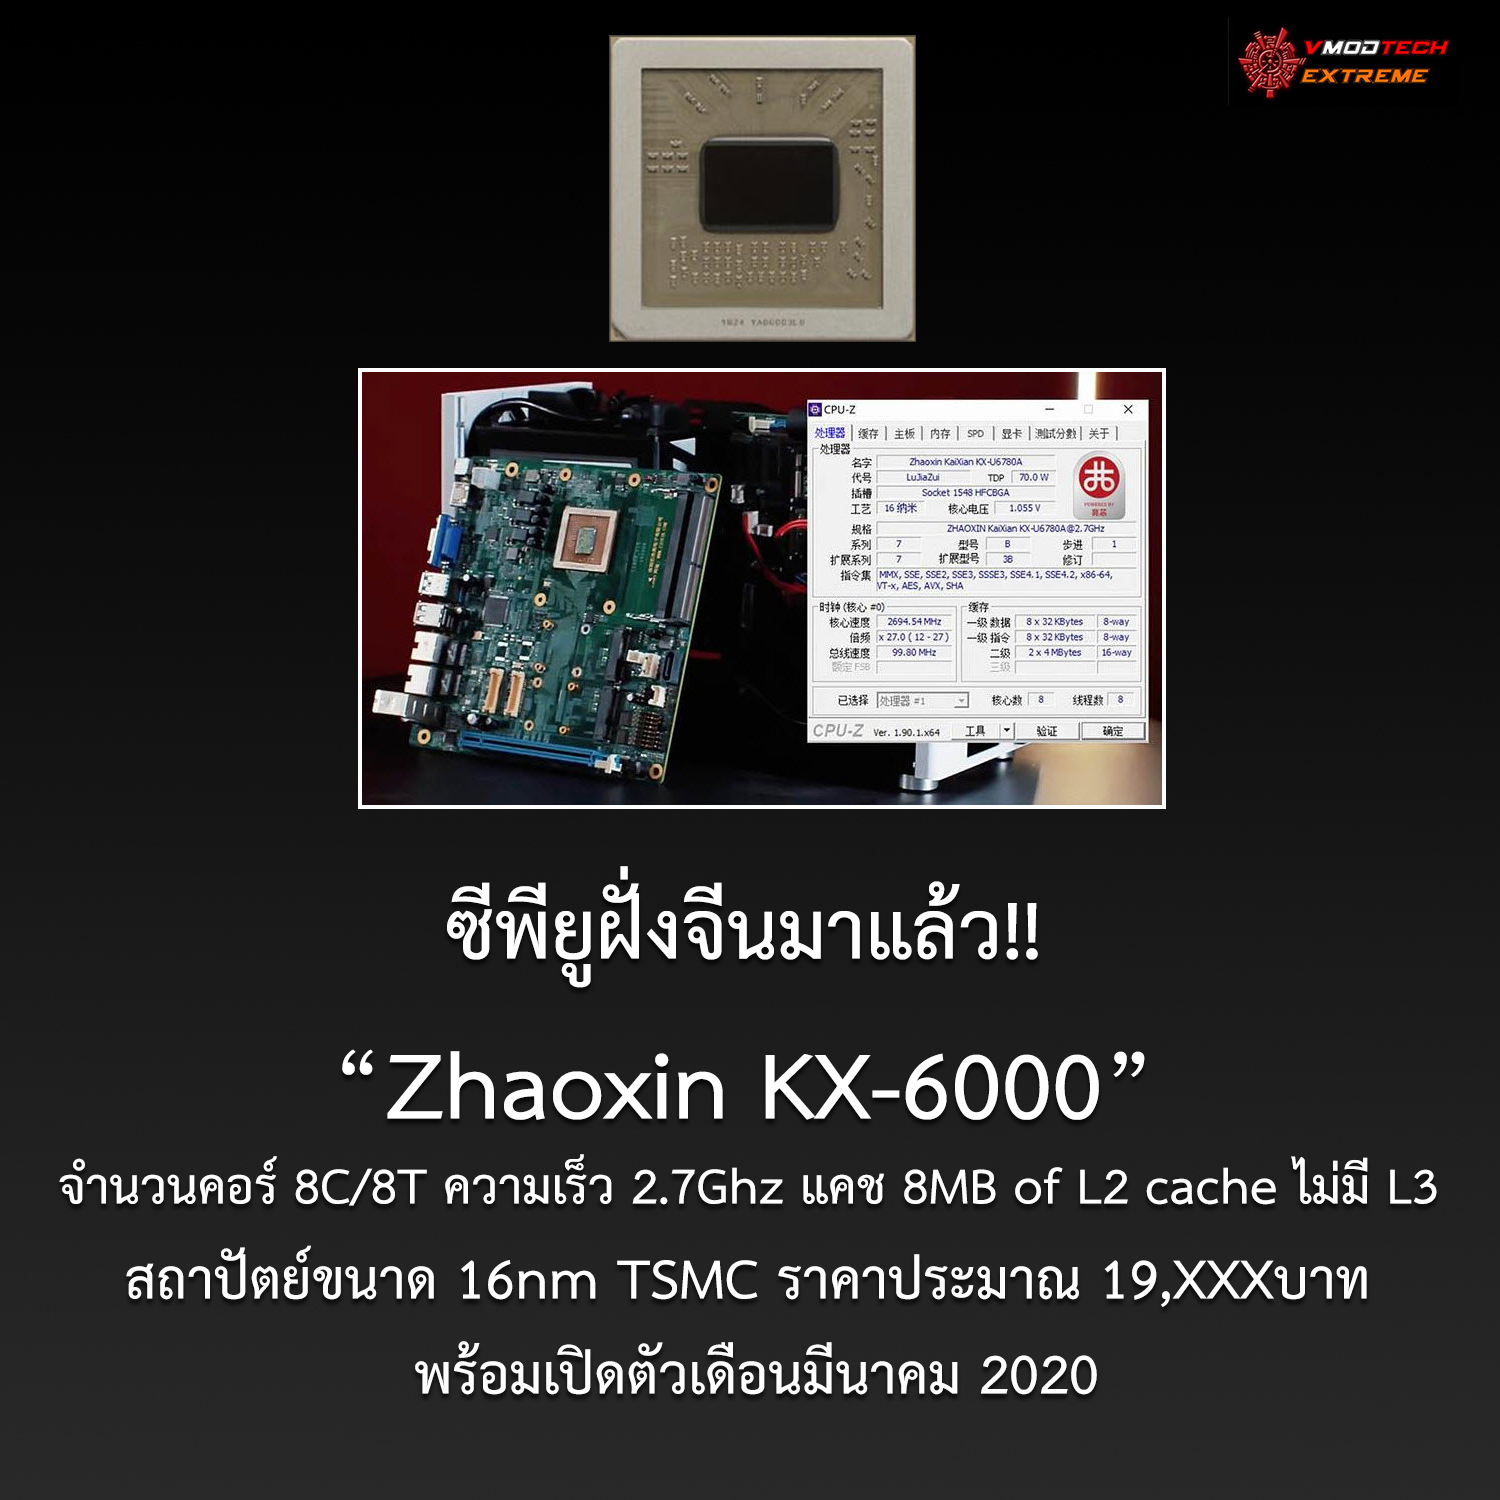 zhaoxin kx 6000 ซีพียูฝั่งจีนมาแล้ว!! Zhaoxin KX 6000 จำนวนคอร์ 8C/8T ความเร็ว 2.7Ghz สถาปัตย์ 16nm พร้อมเปิดตัวเดือนมีนาคม 2020